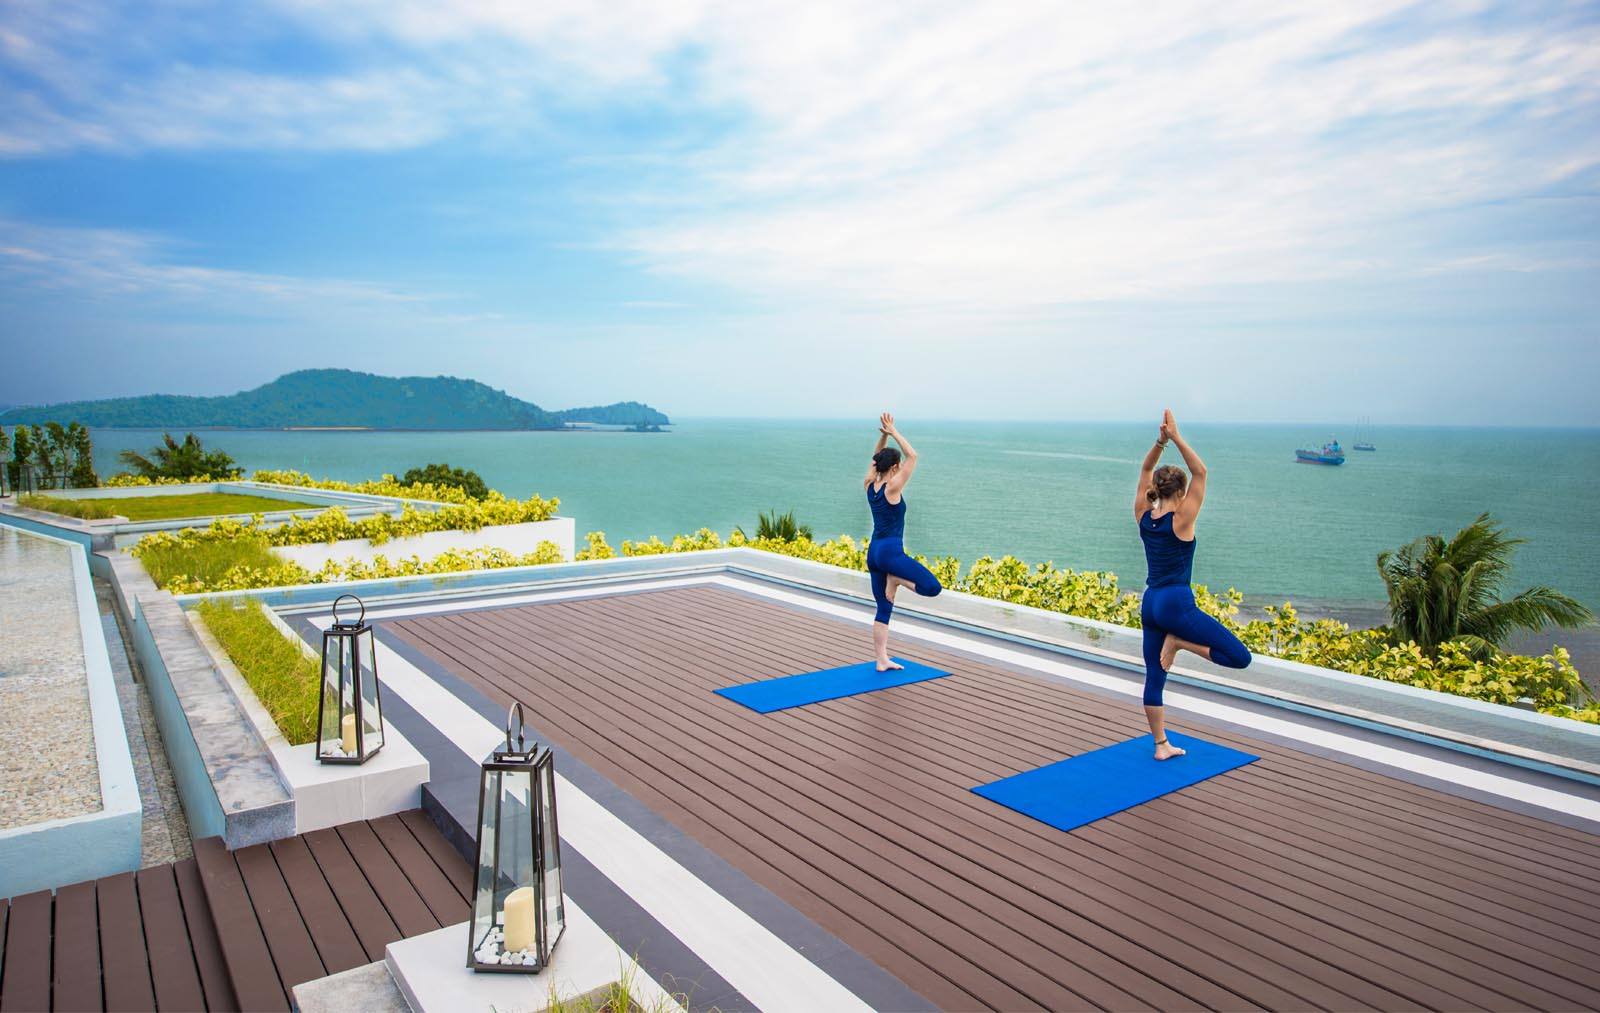 Outdoor yoga session overlooking the ocea at Amatara Wellness Resort in Phuket, Thailand